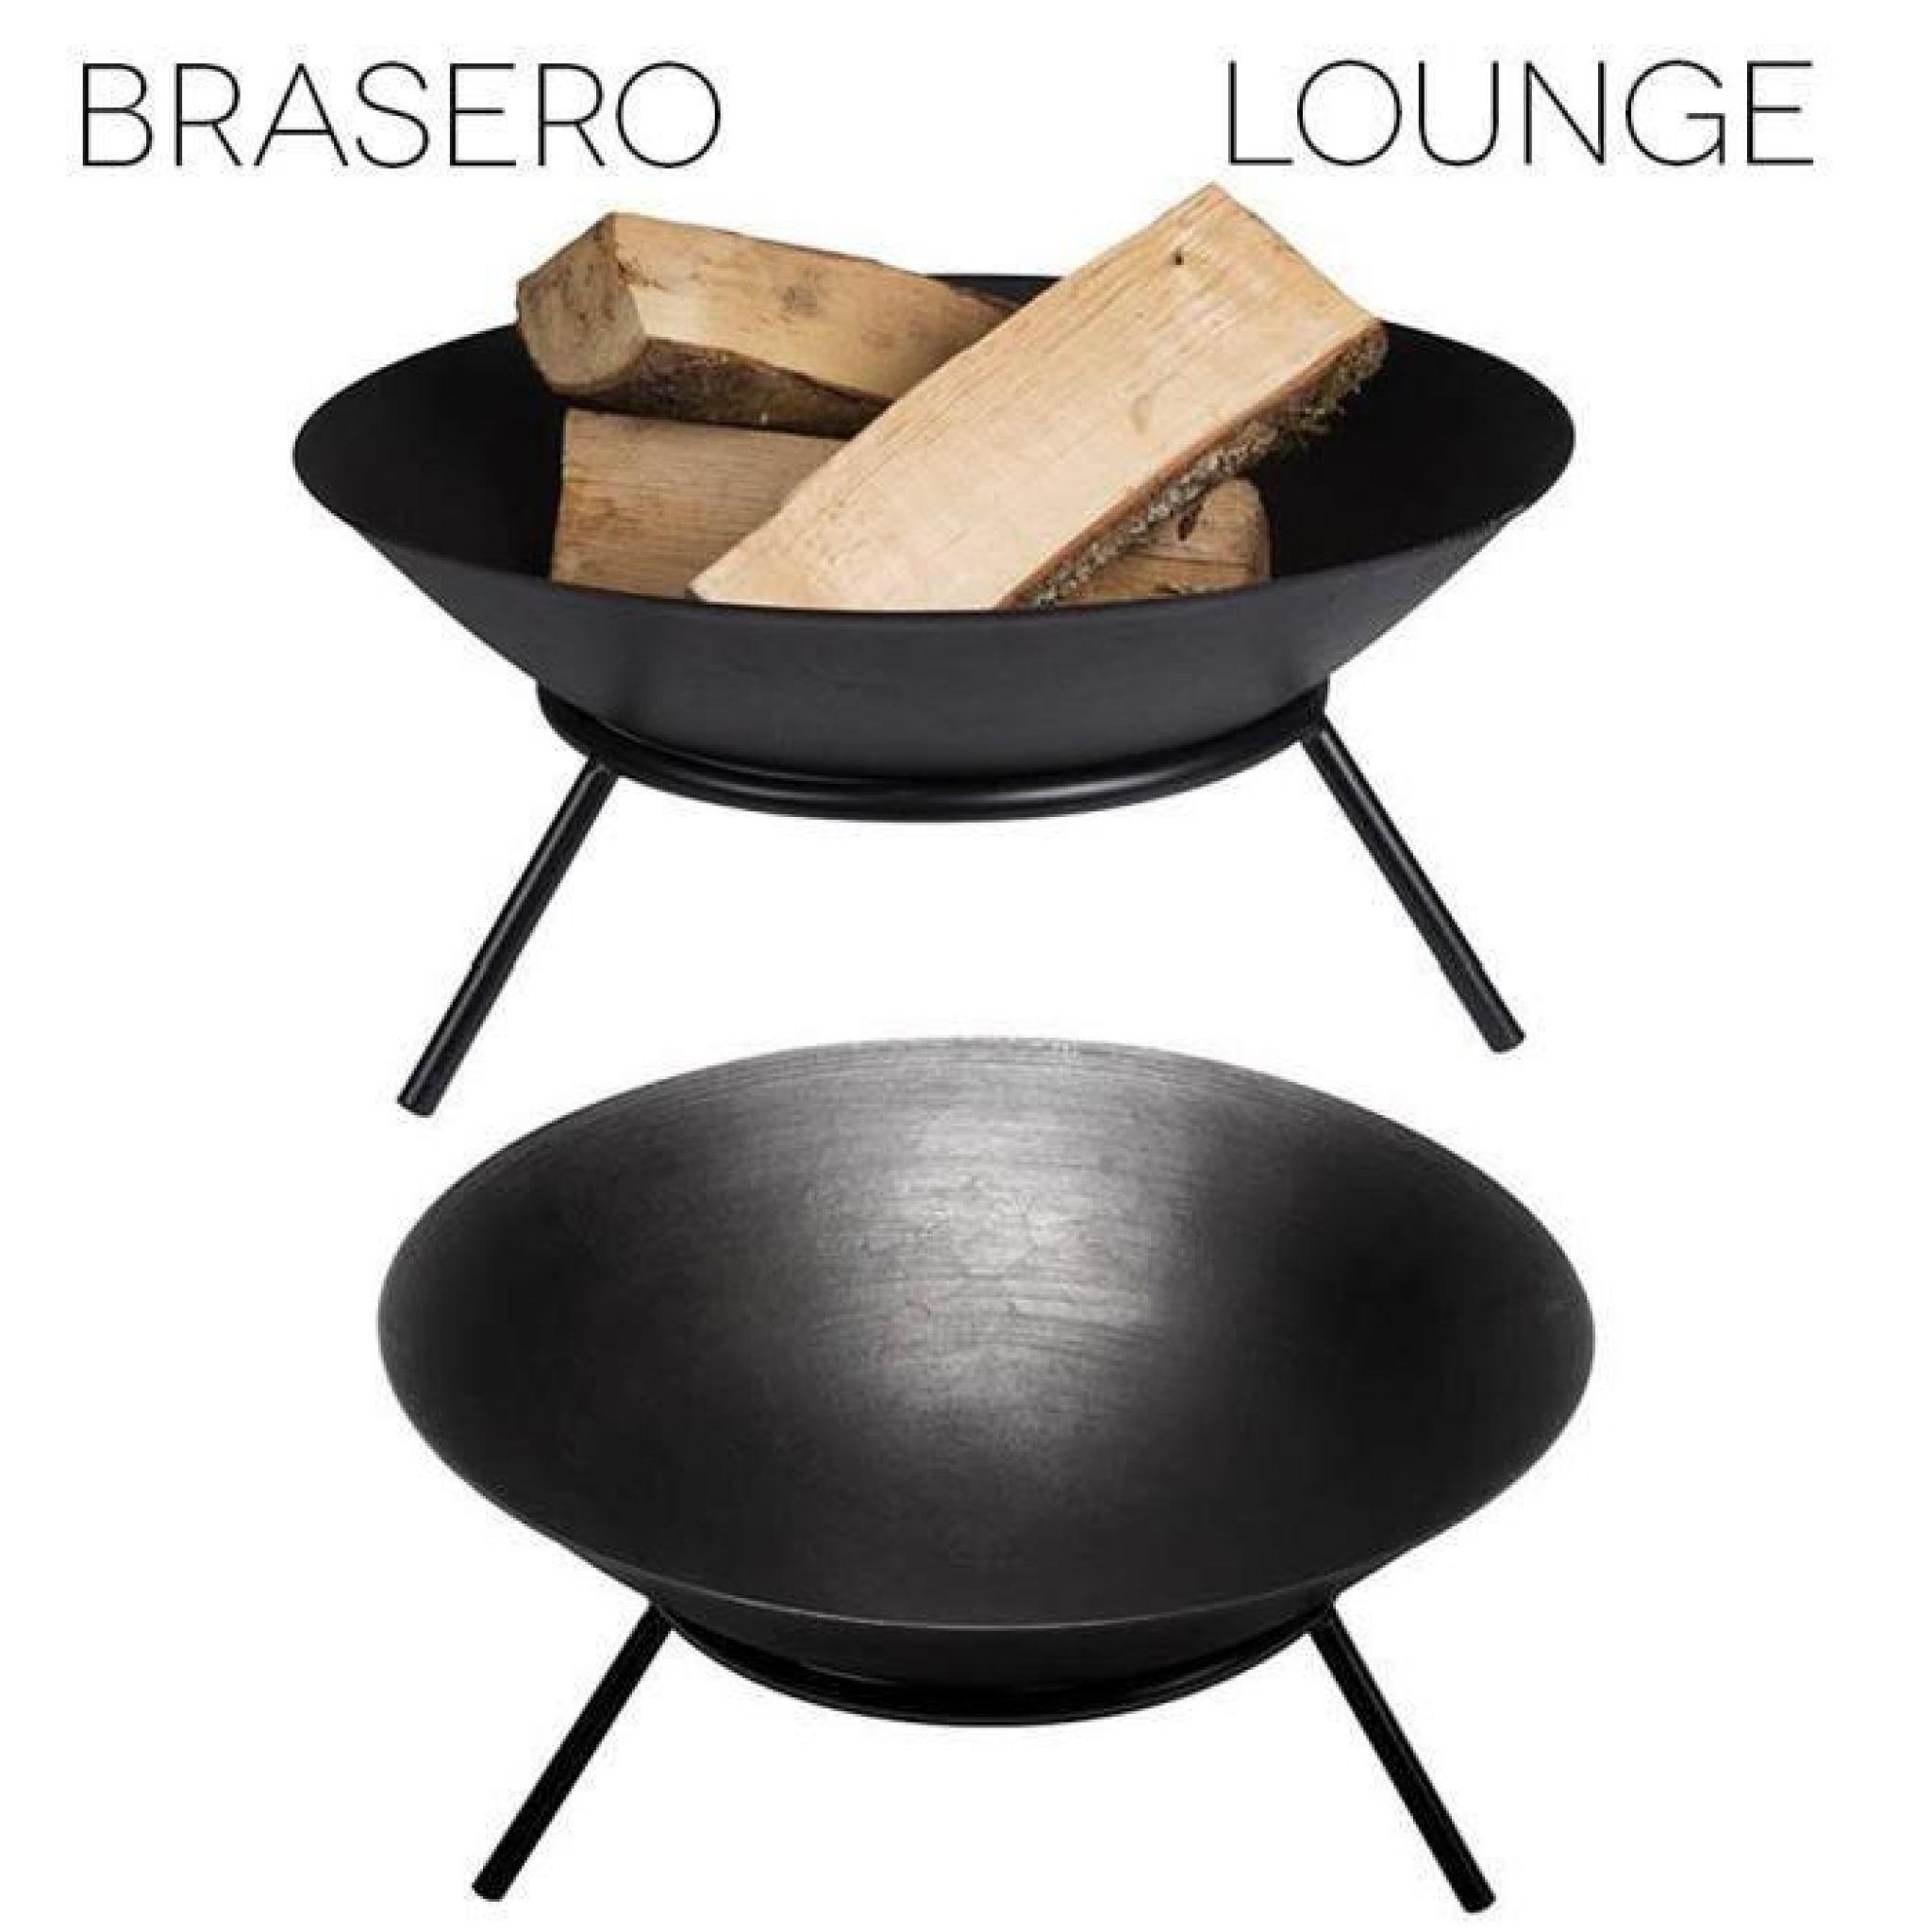 Brasero Lounge en fonte noir 56 cm Noir pas cher